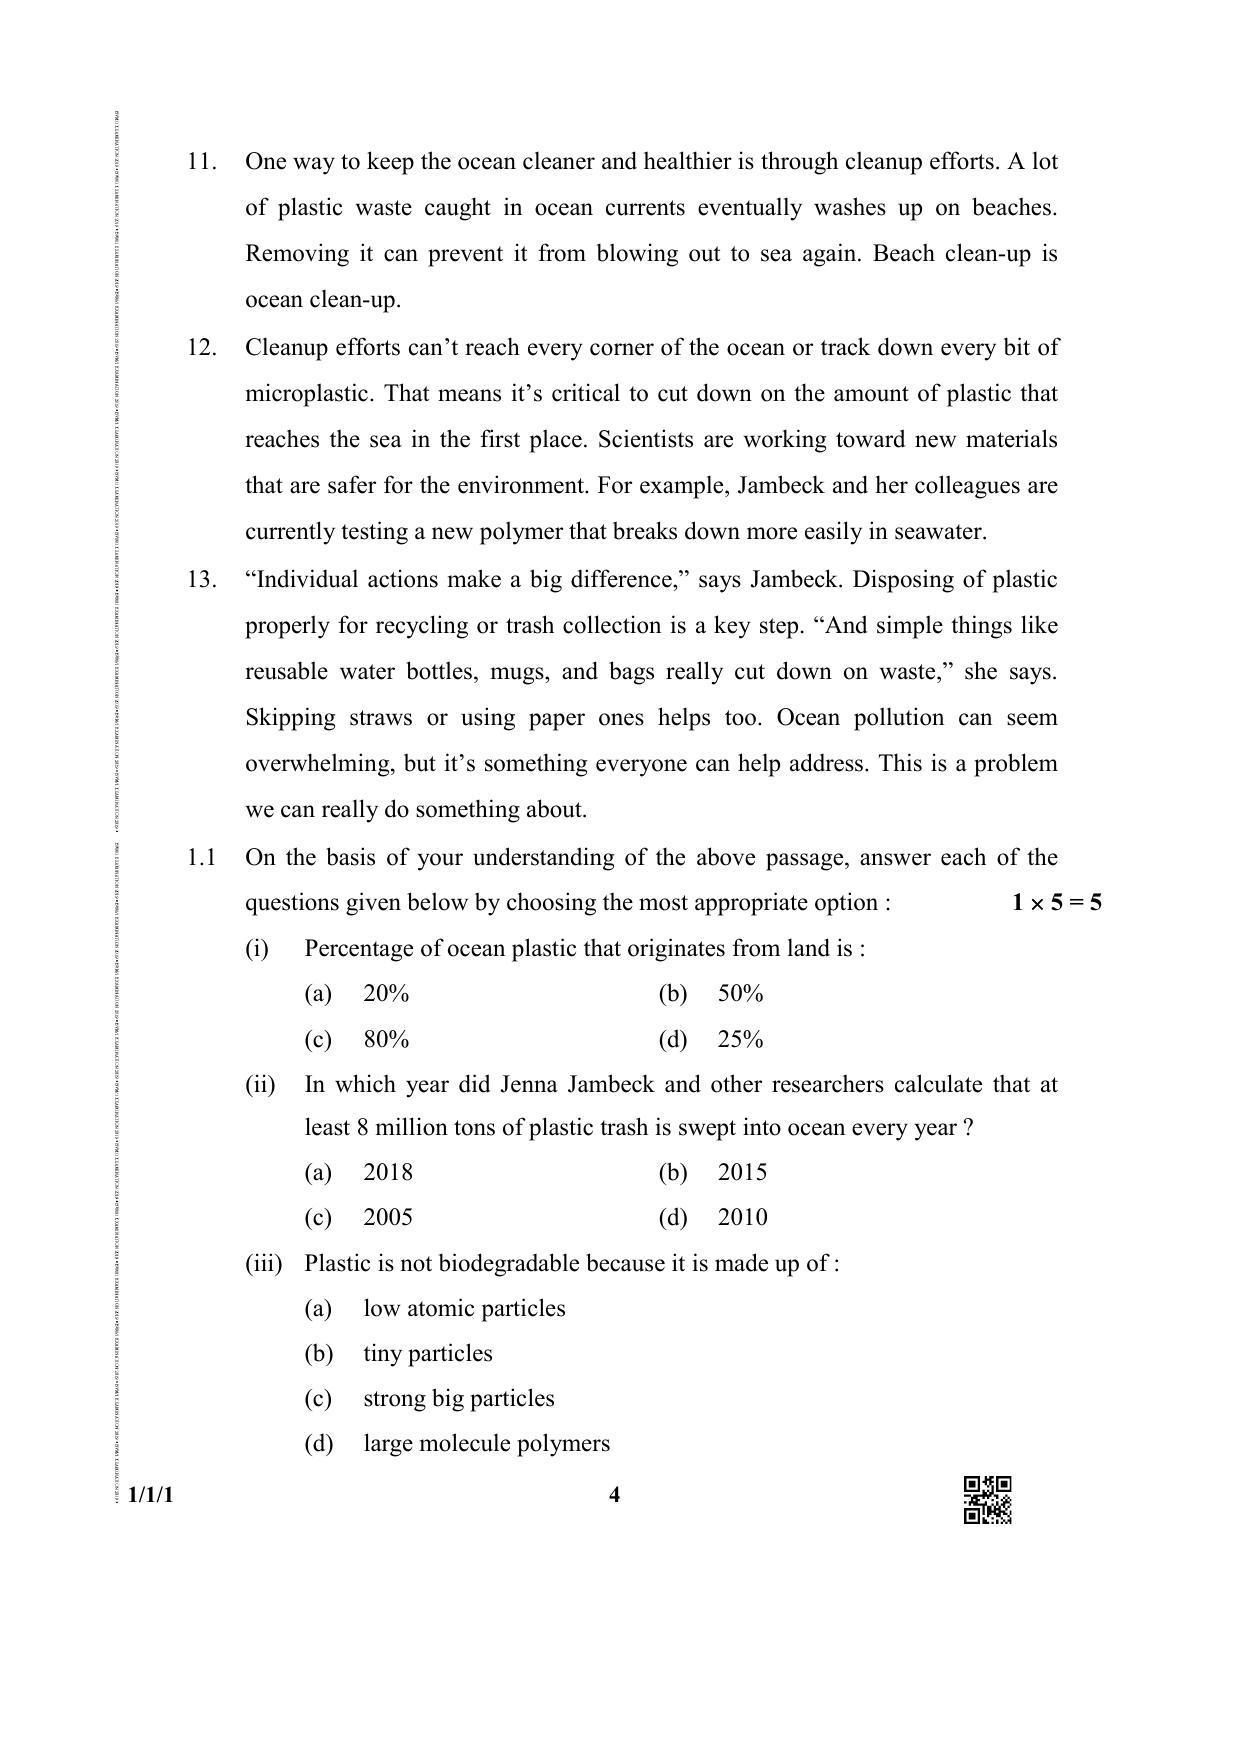 CBSE Class 12 1-1-1 (English Core) 2019 Question Paper - Page 4